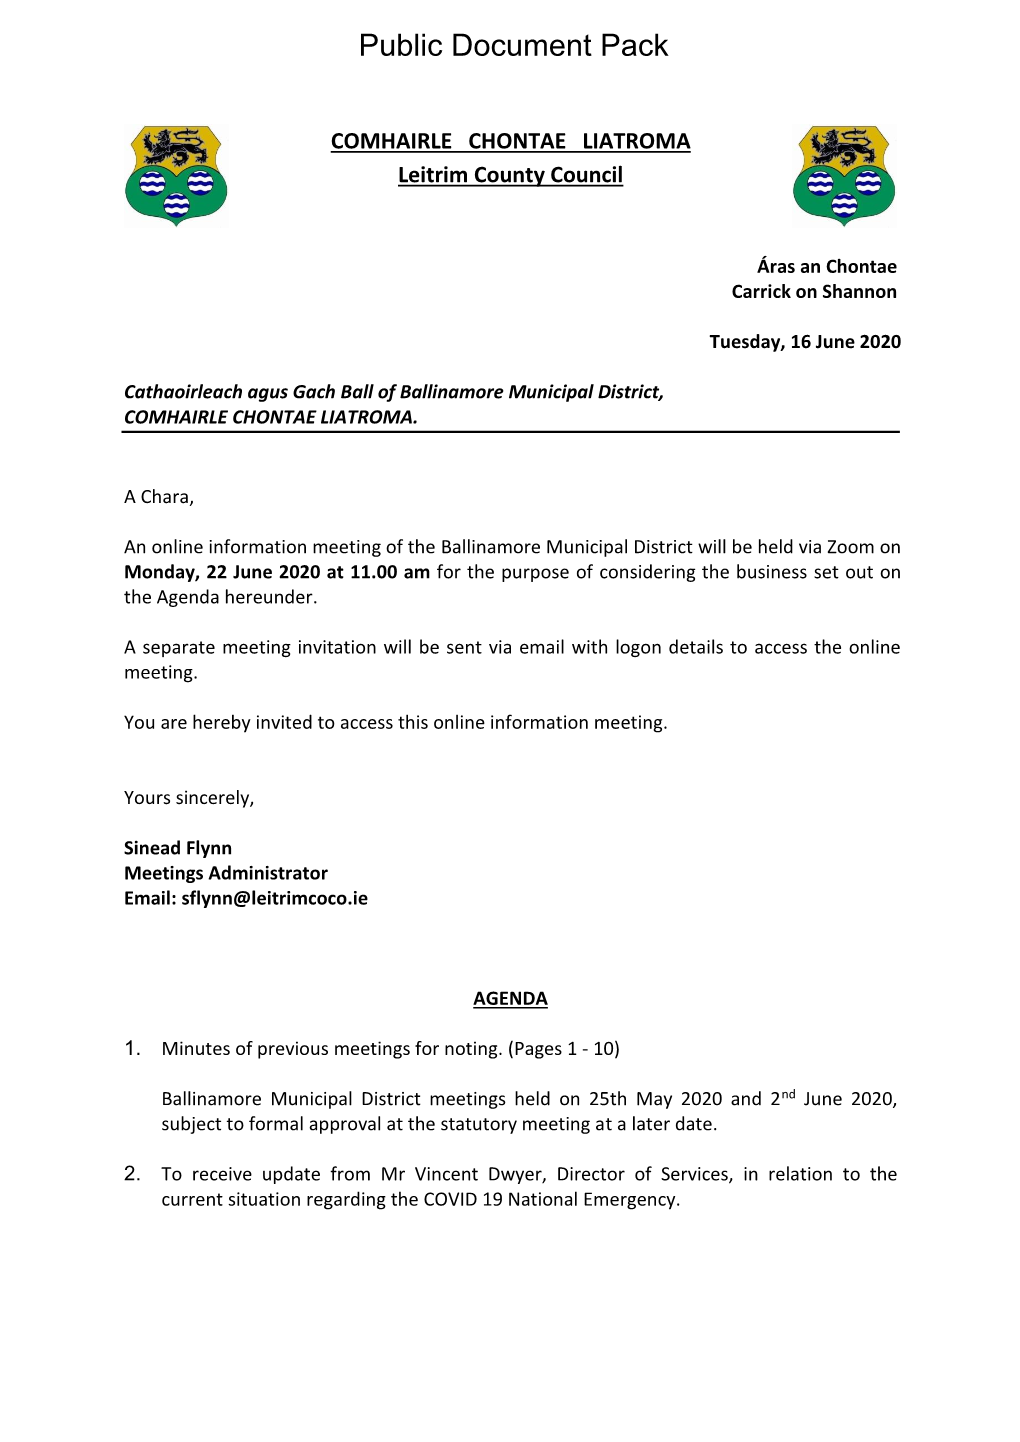 (Public Pack)Agenda Document for Ballinamore Municipal District, 22